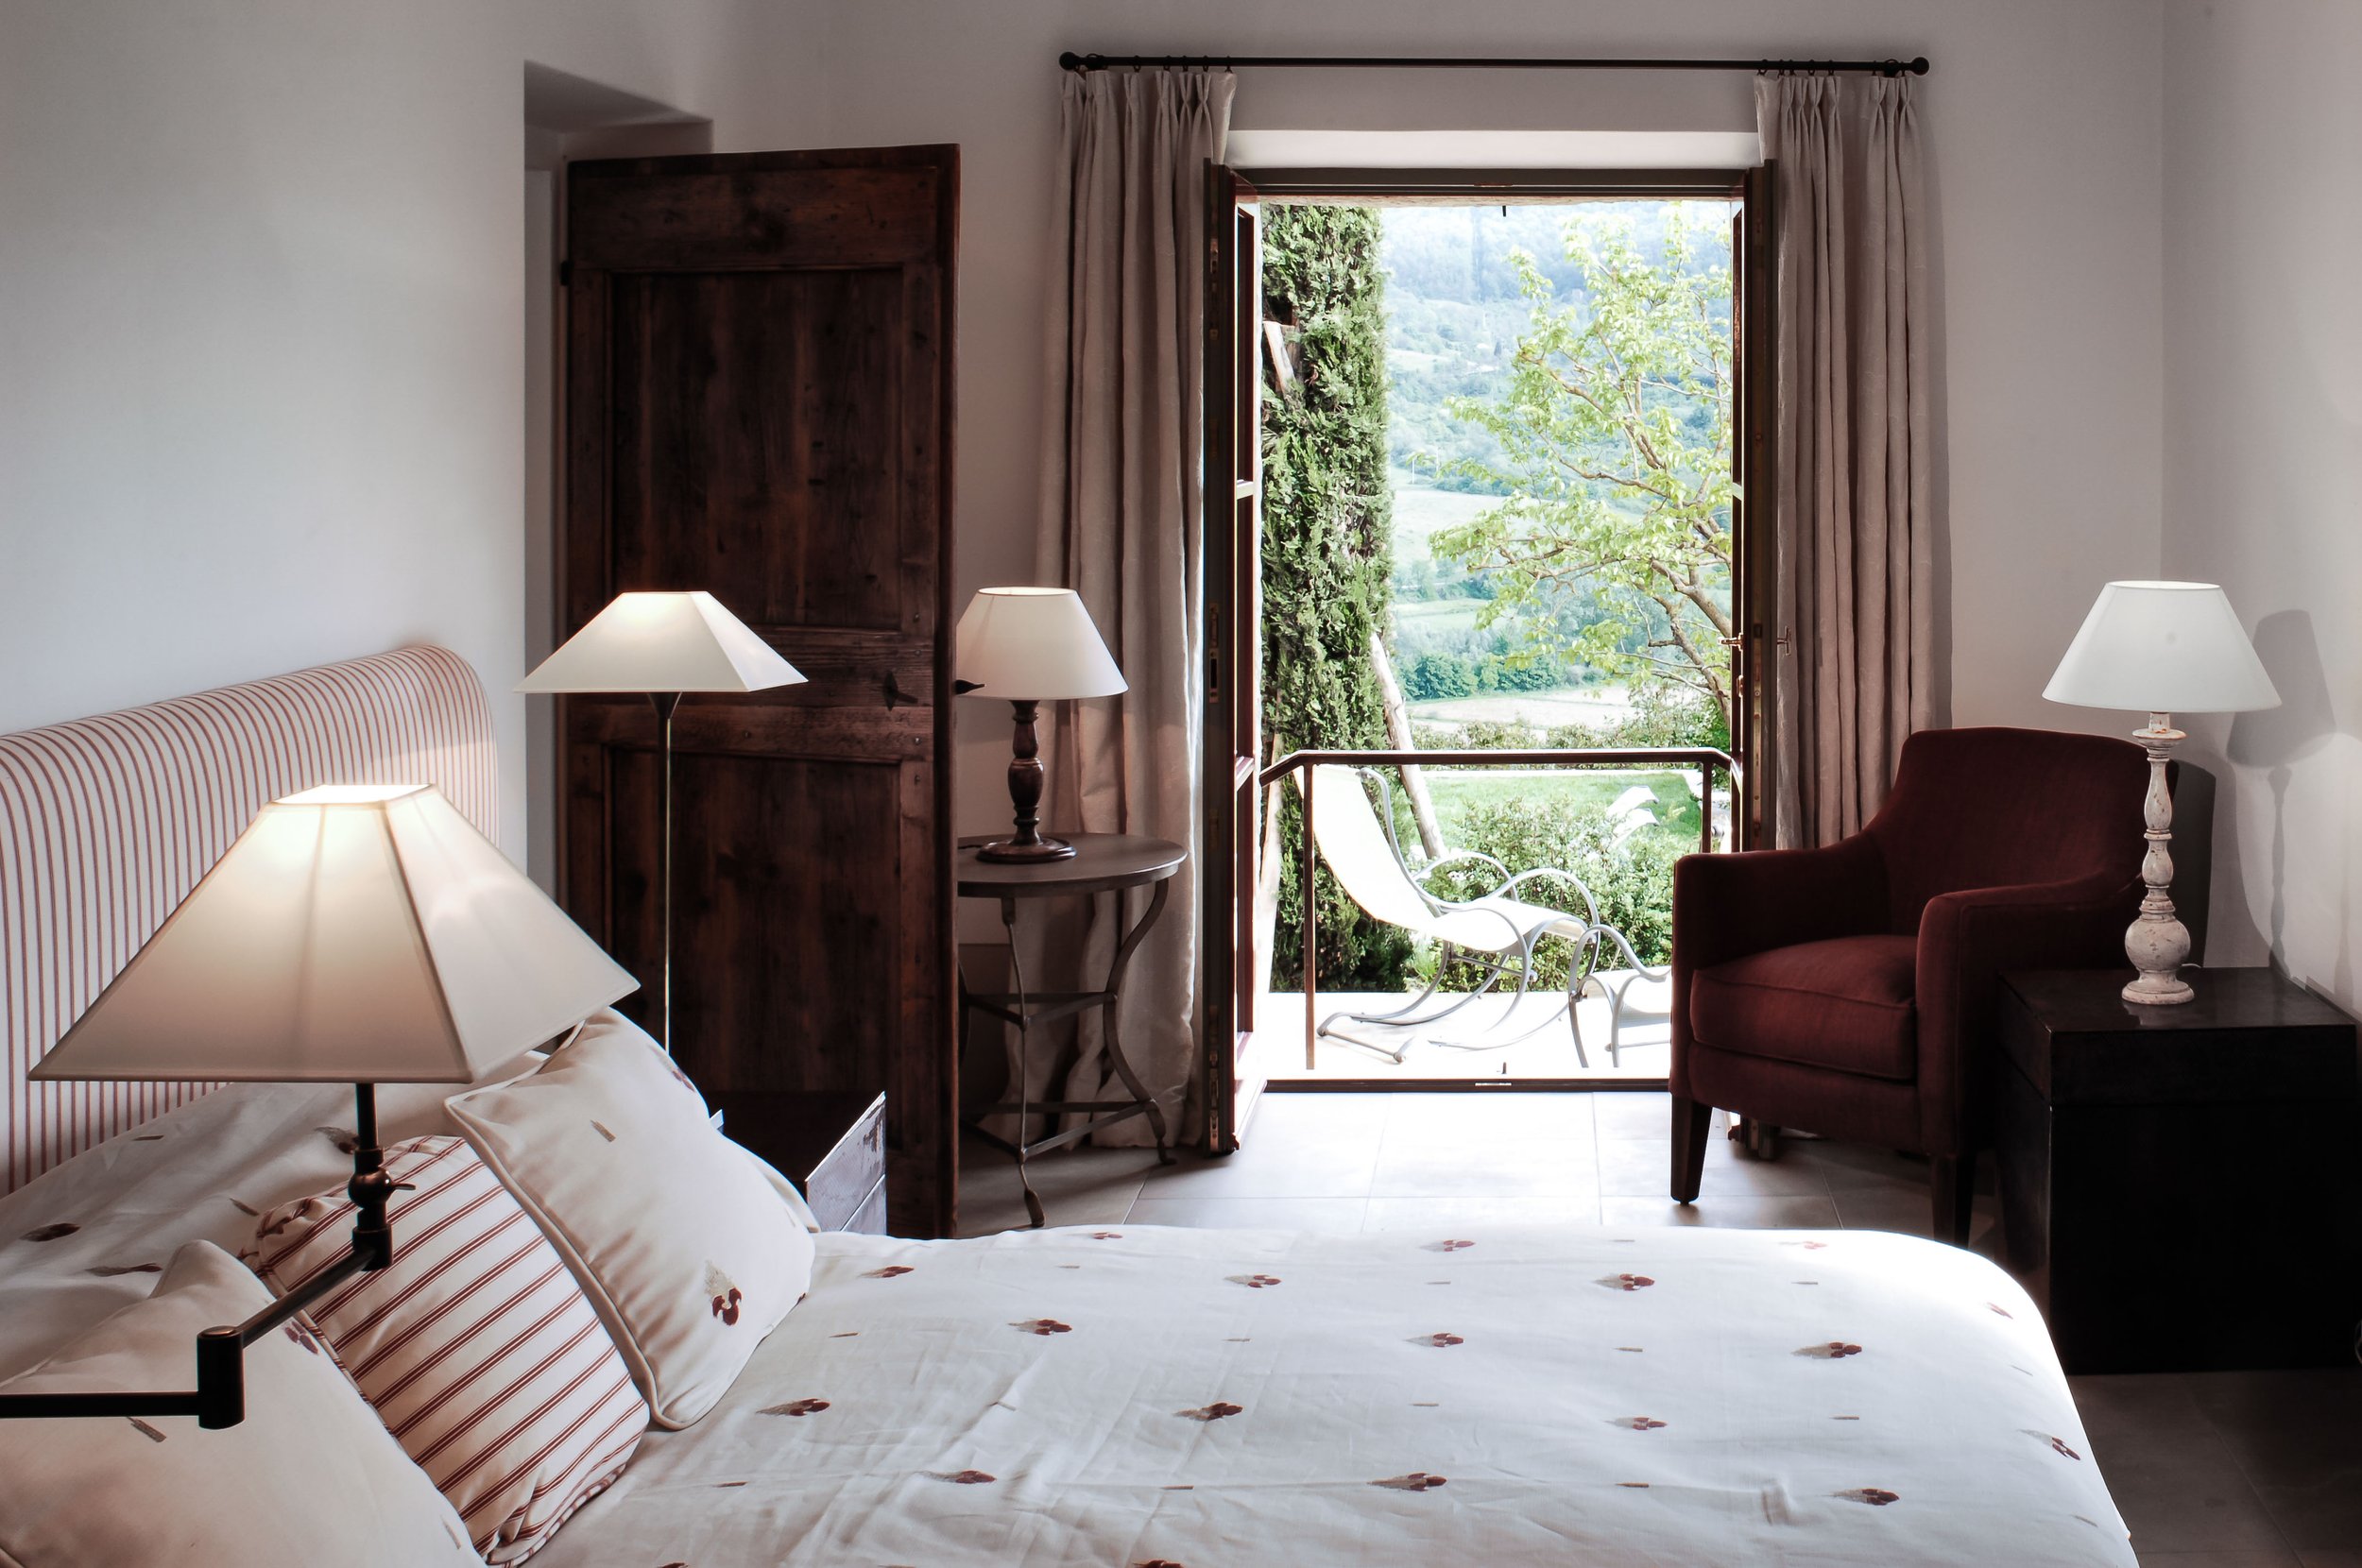 Francis York Exclusive Luxury Villa Rental in Umbria, Italy 23.jpg